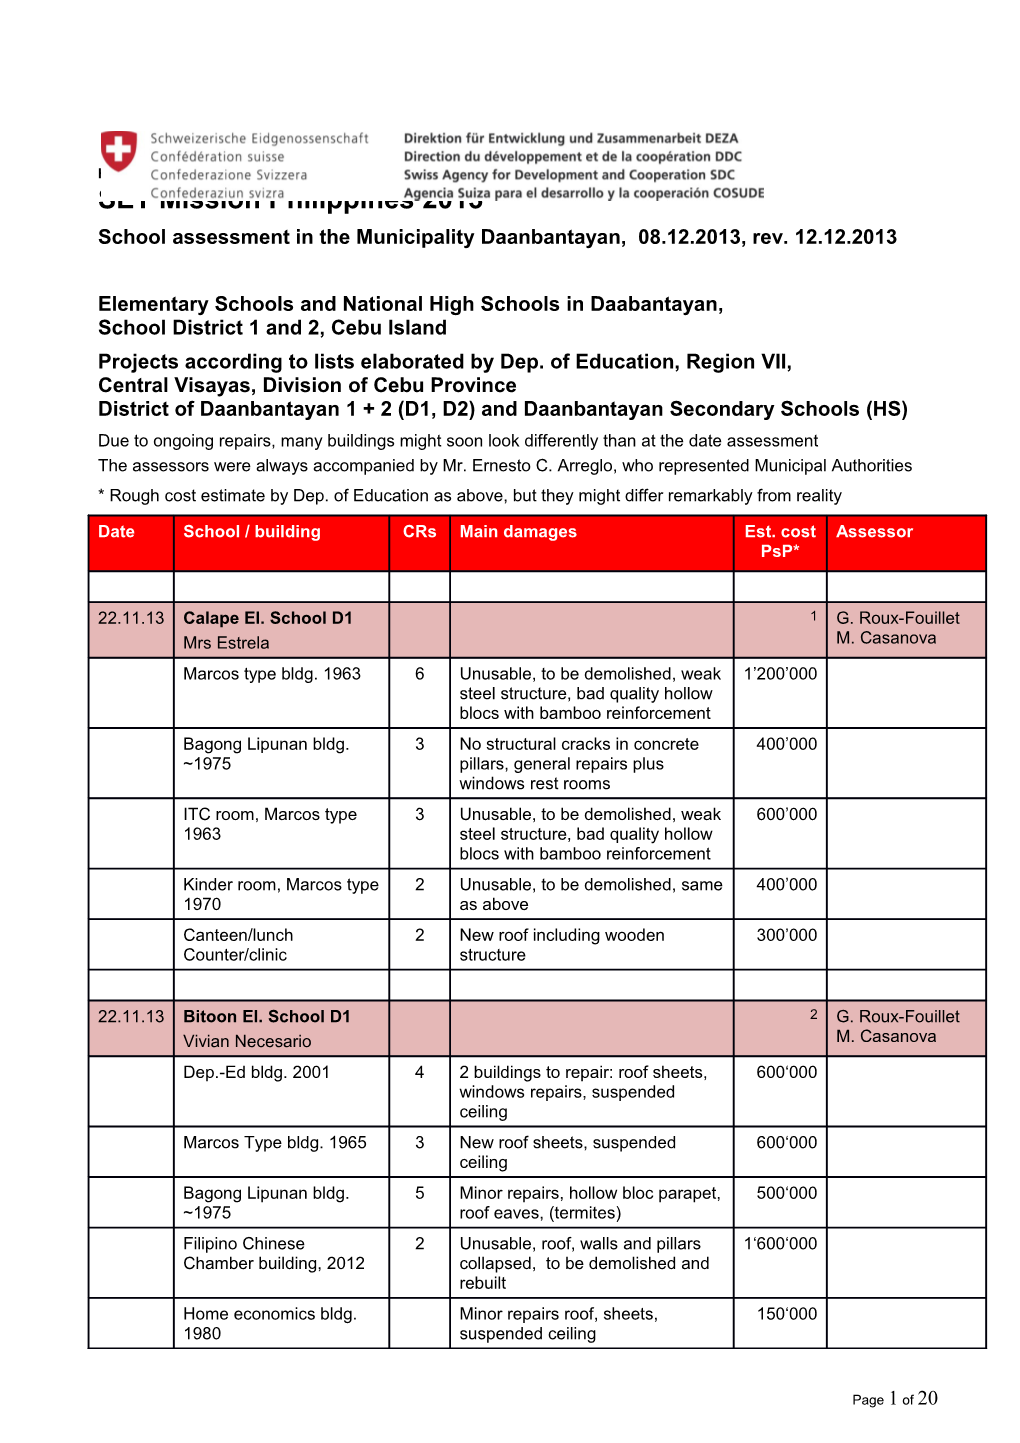 School Assessment in the Municipality Daanbantayan, 08.12.2013, Rev. 12.12.2013